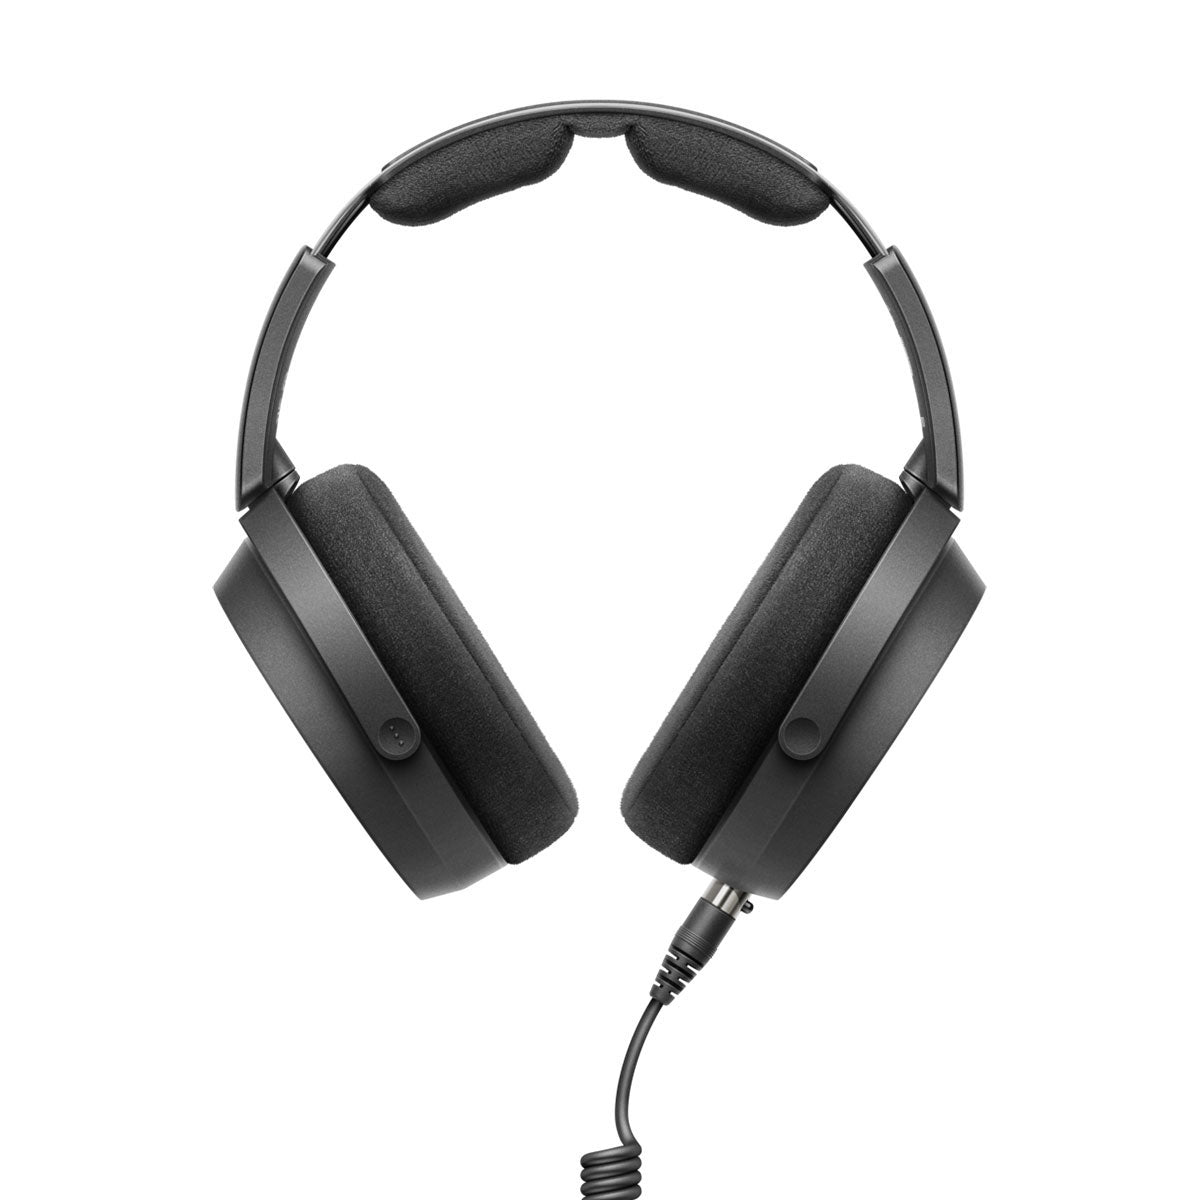 Sennheiser HD 490 PRO Plus Professional Reference Studio Headphones